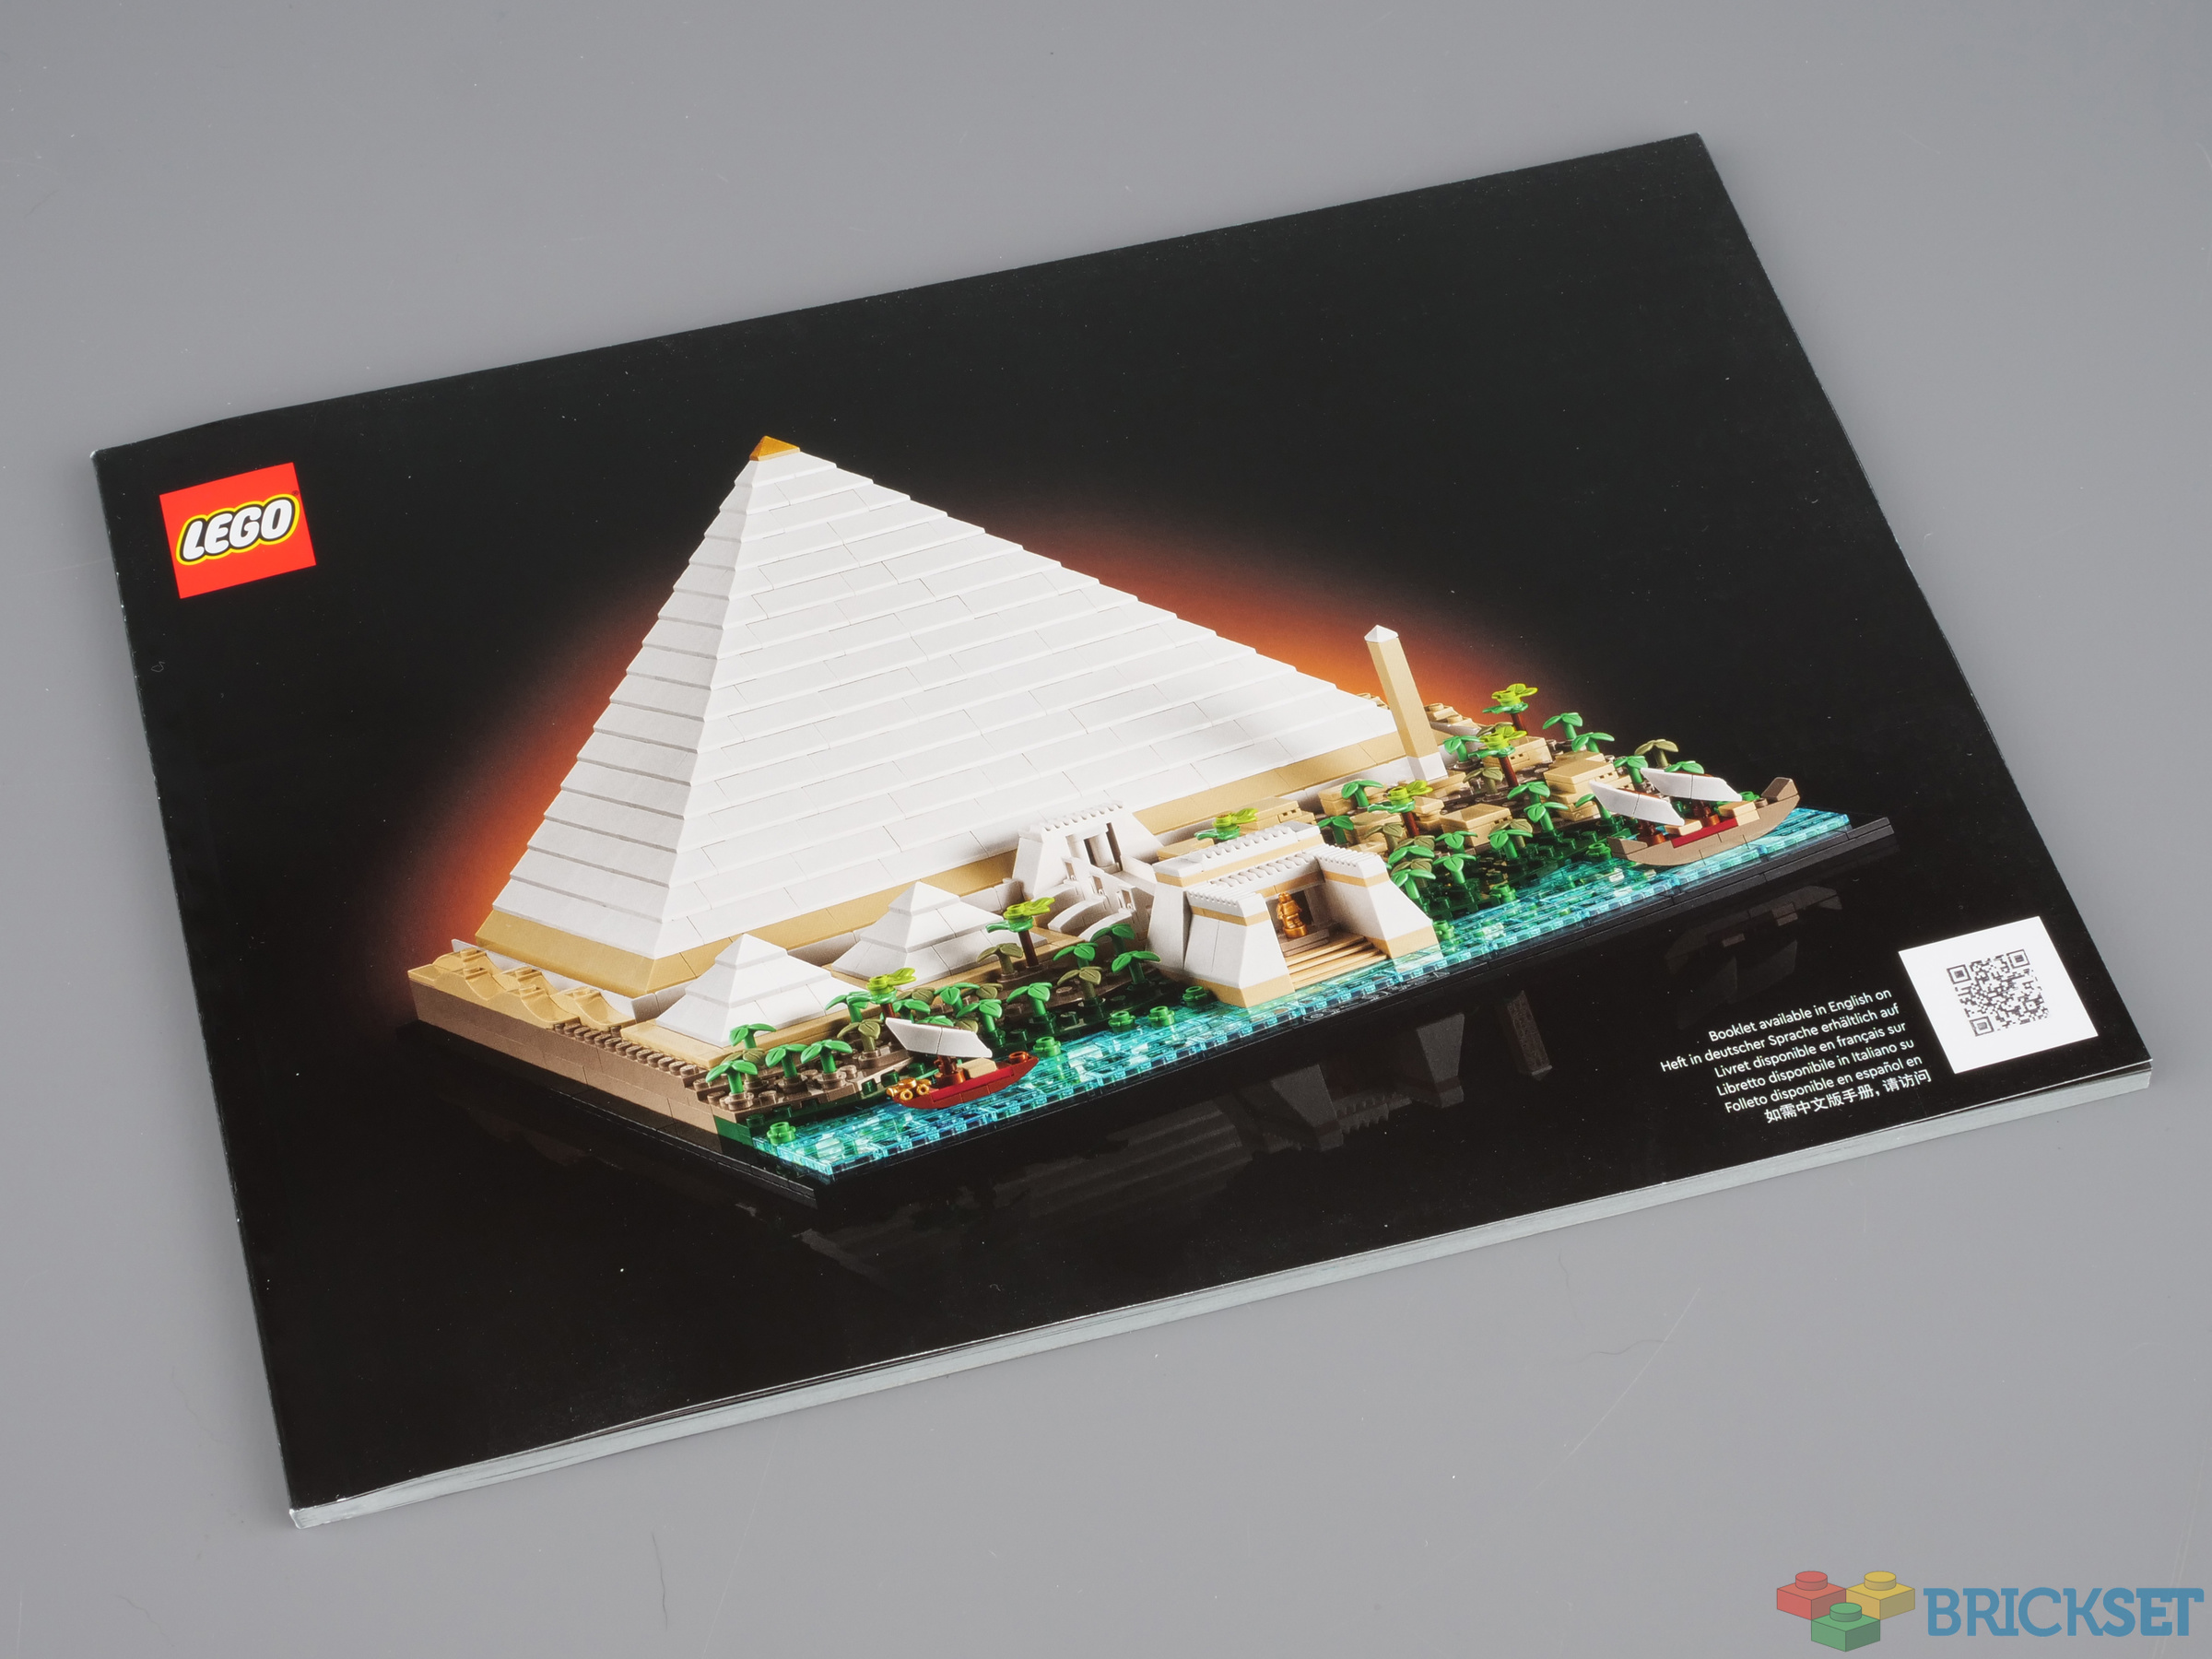 LEGO 21058 The Great of | Giza review Pyramid Brickset